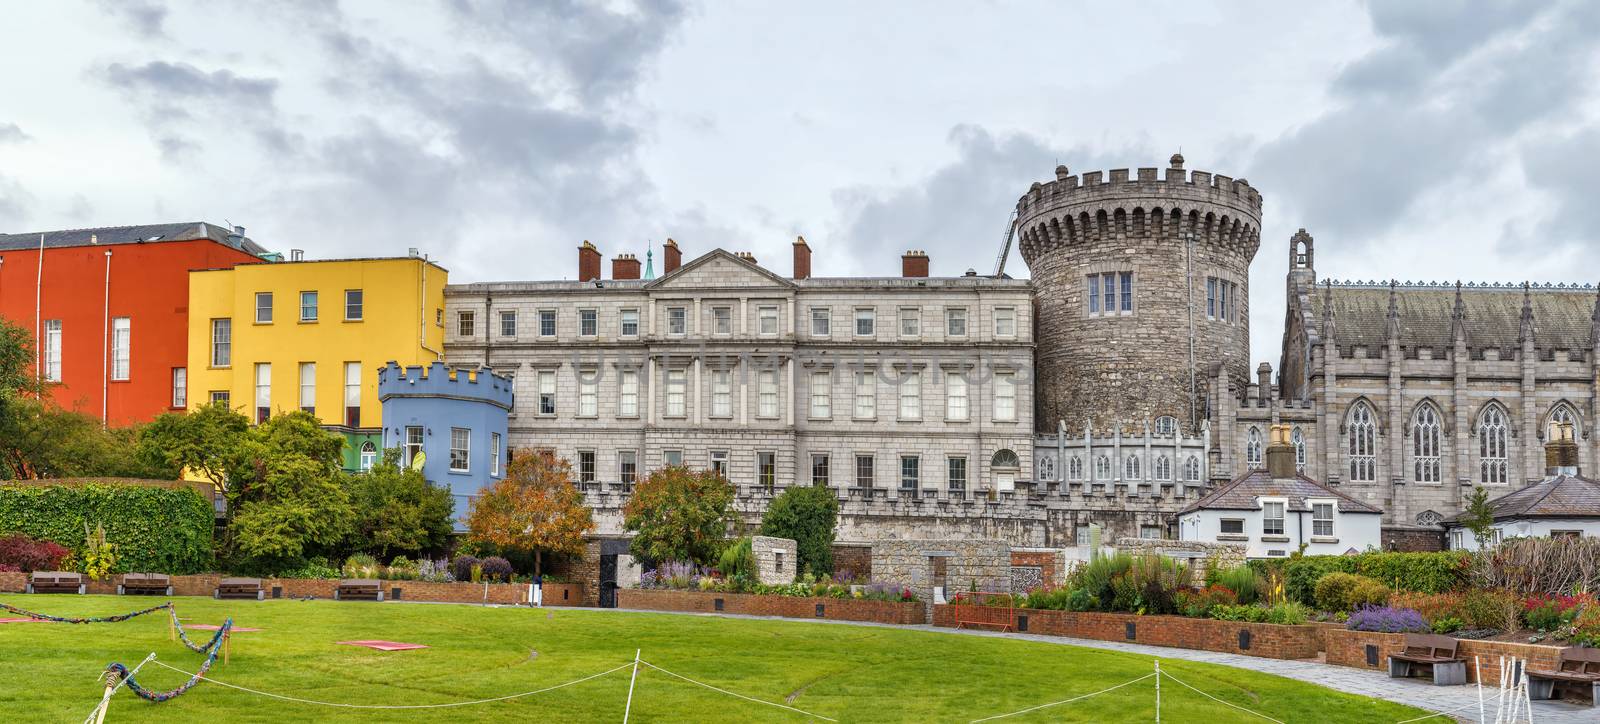 Dublin castle, Ireland by borisb17